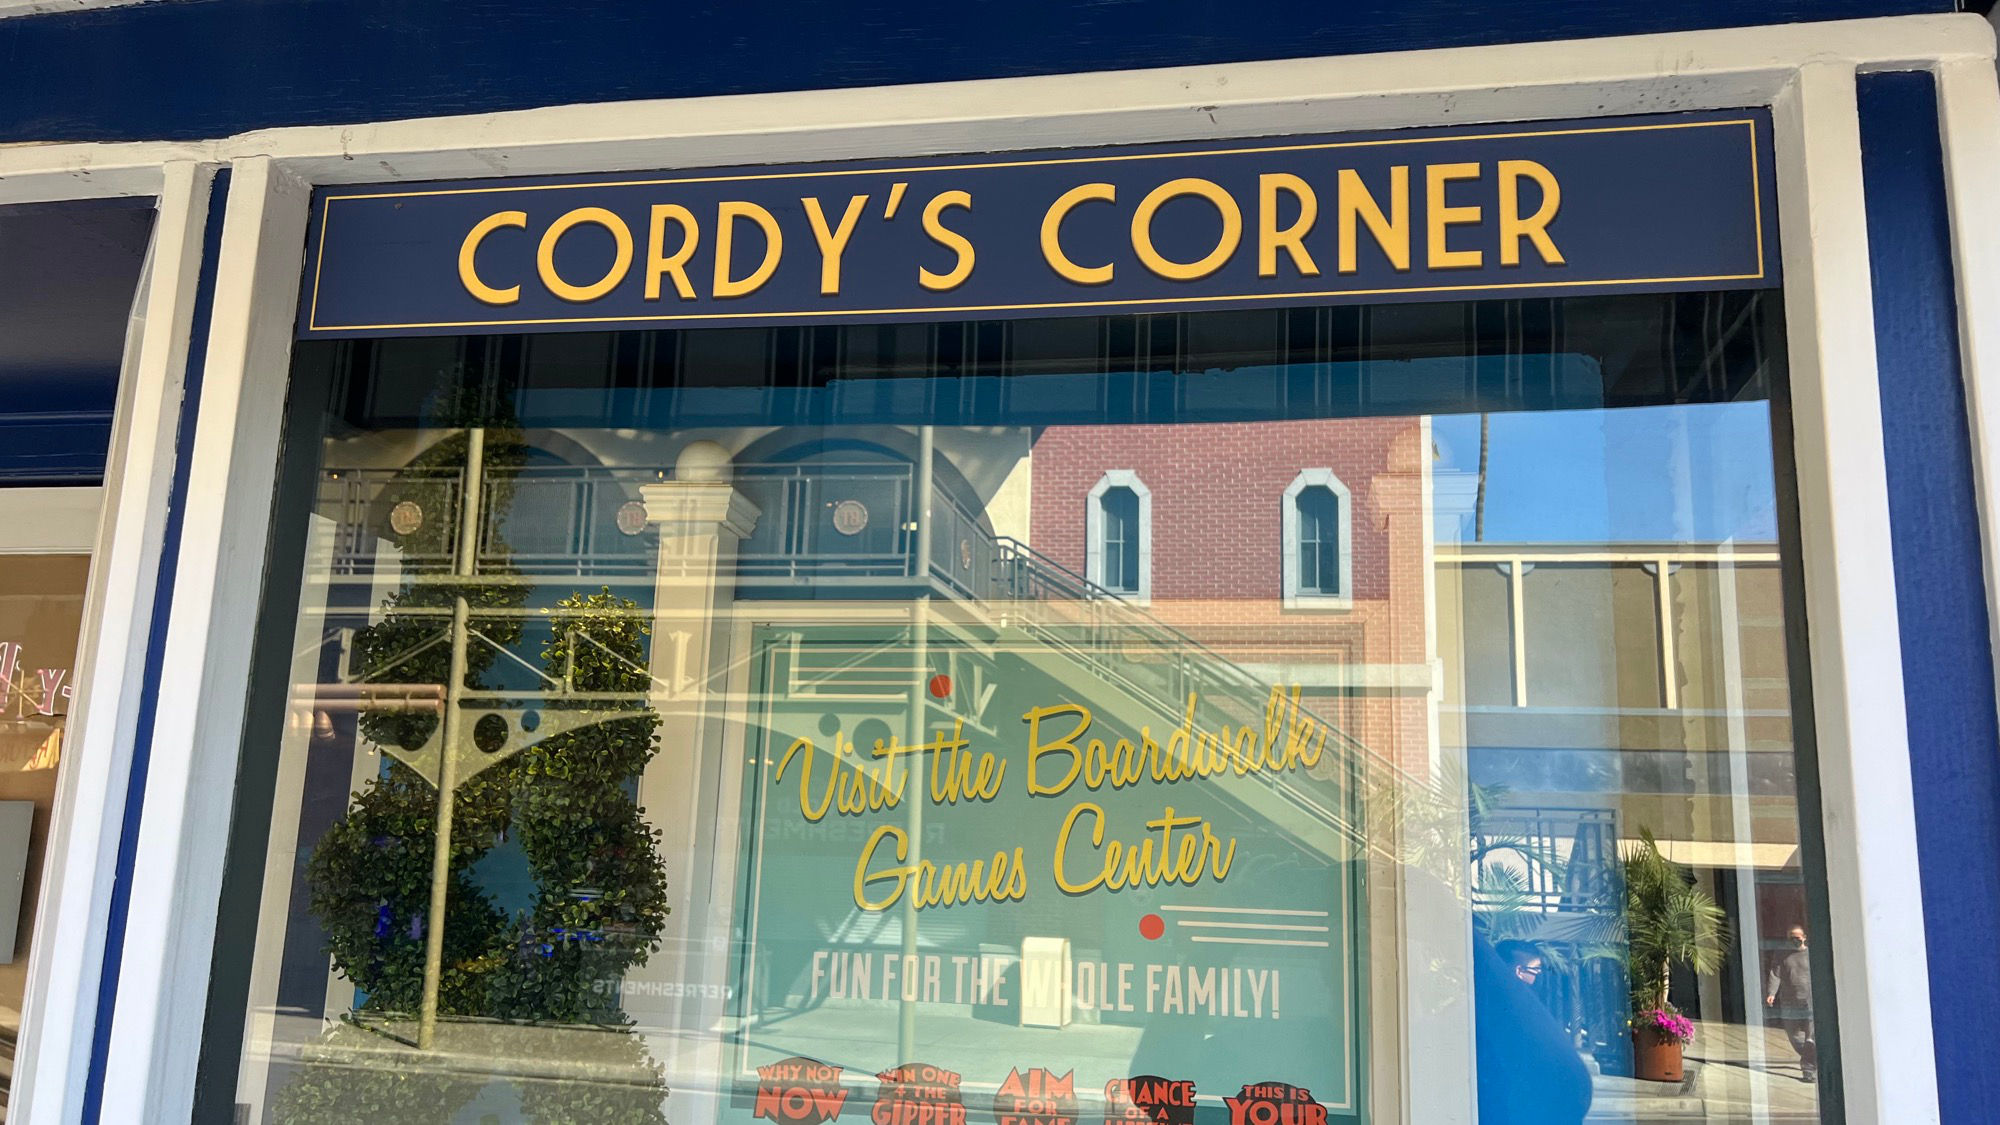 Cordy's Corner Visit the Boardwalk Games Center